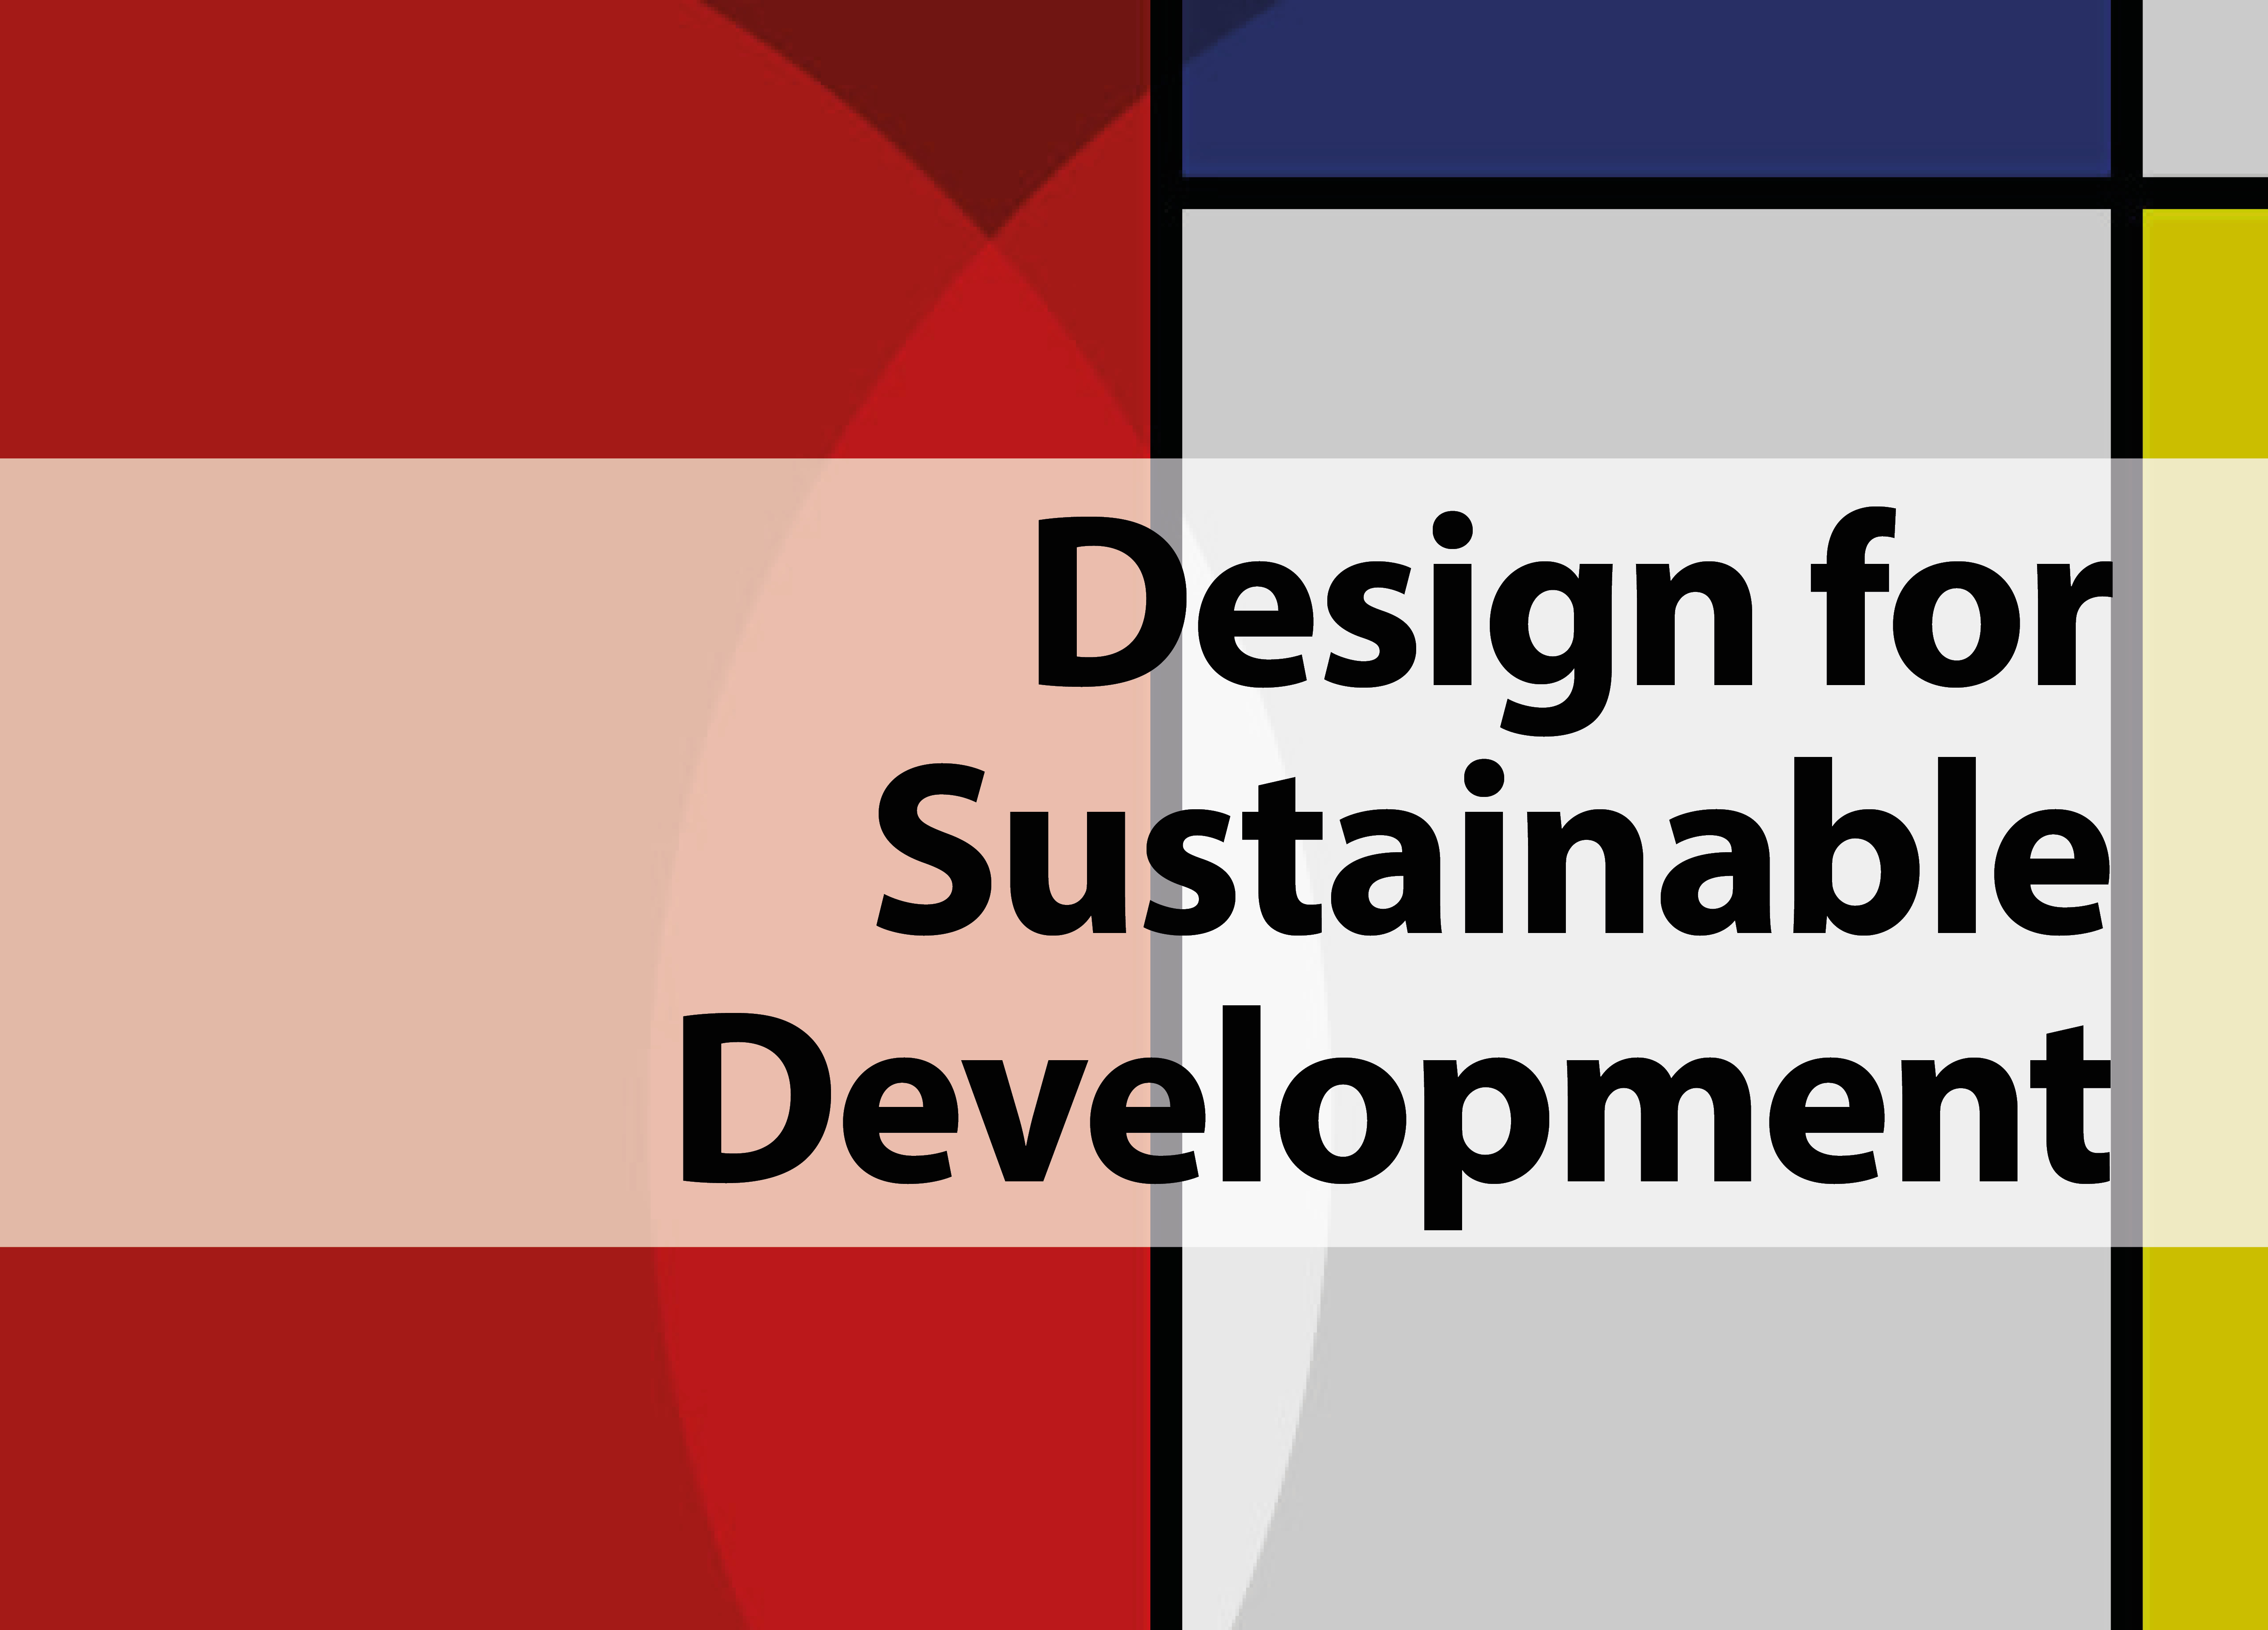 Design for Sustainable Development